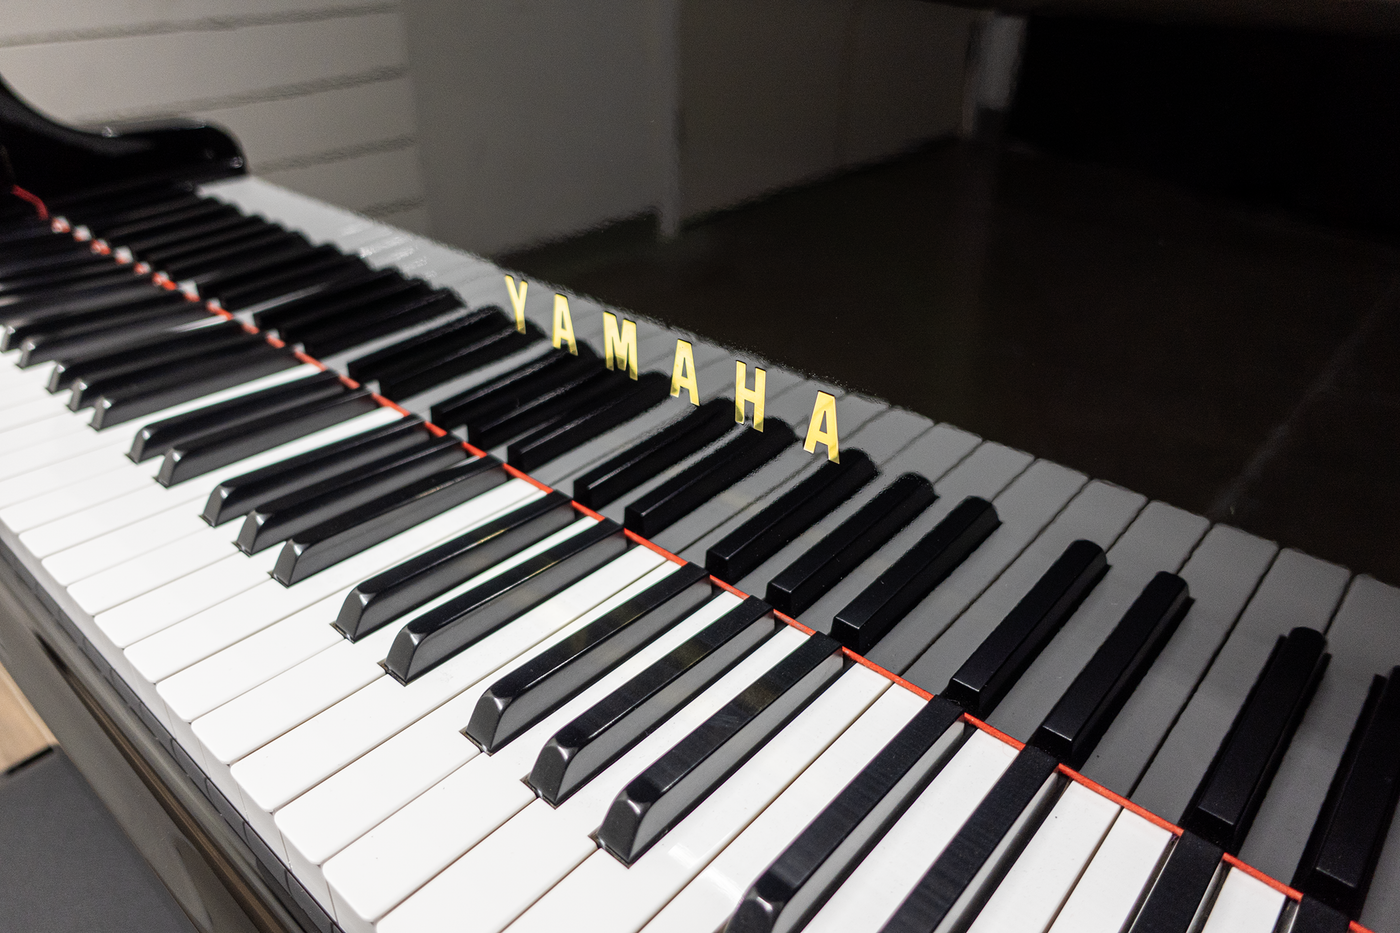 Yamaha G3 Grand Piano